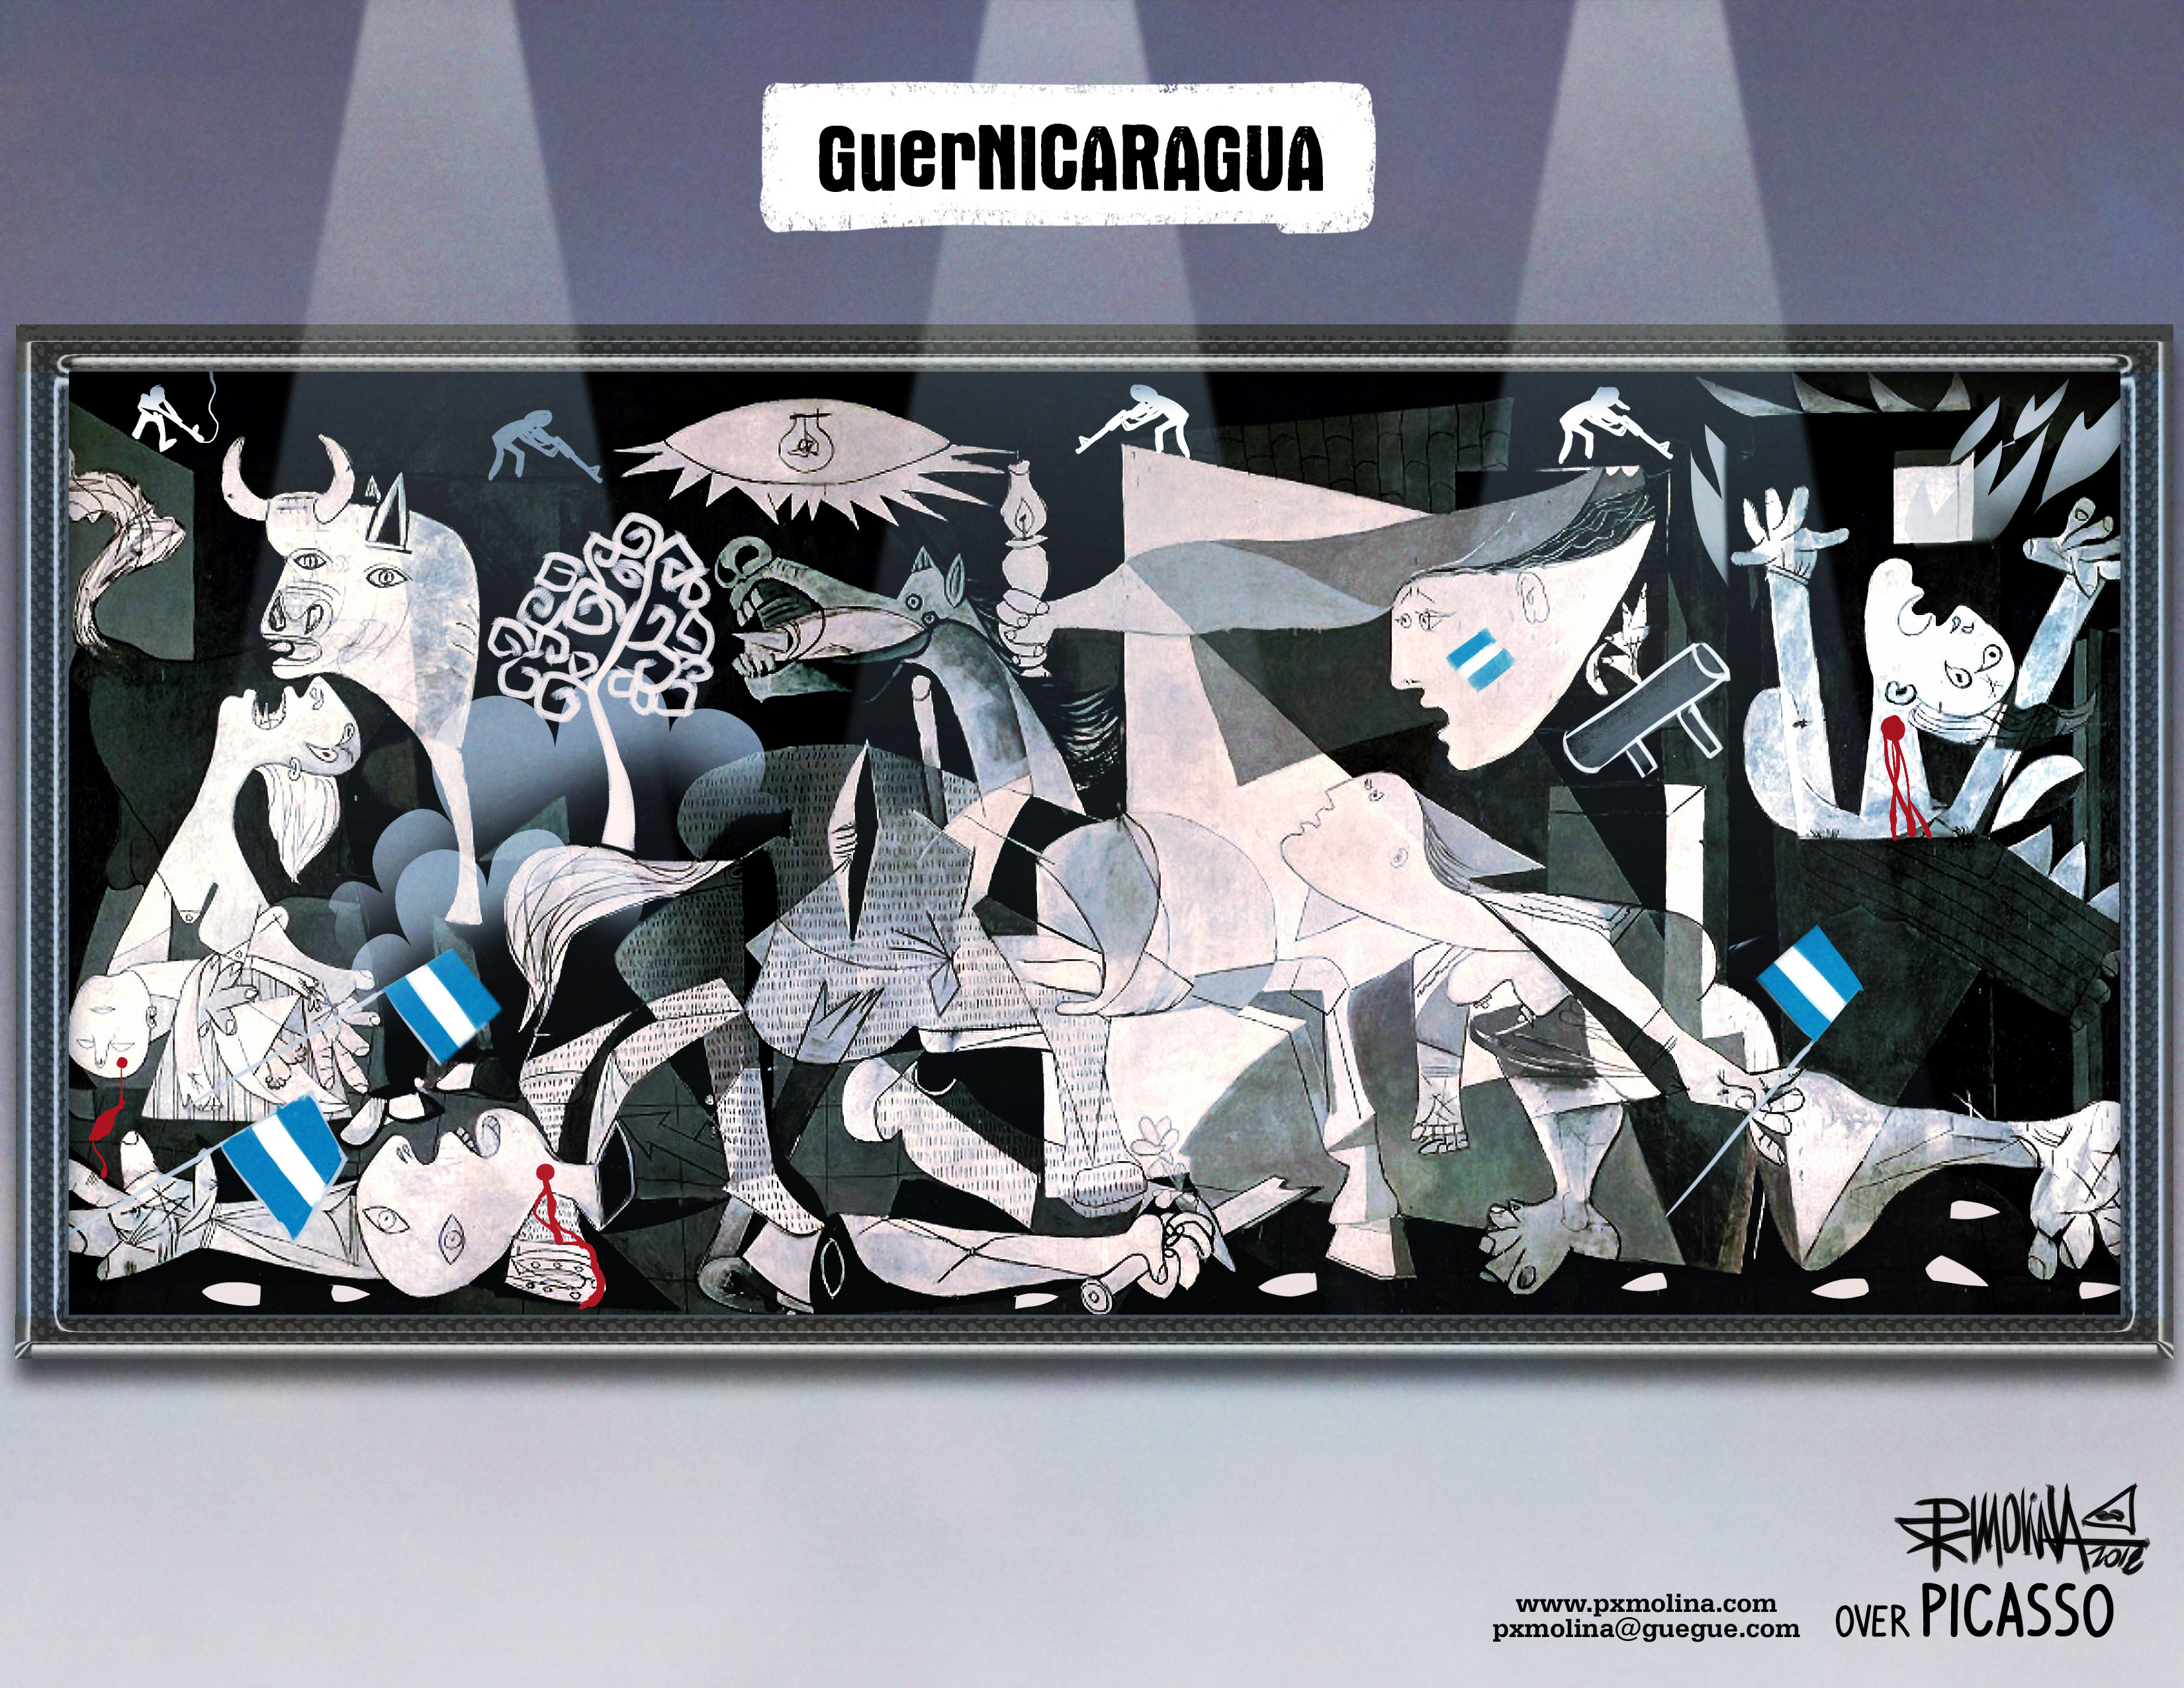 Guernicaragua by PxMolinA. Photo. 